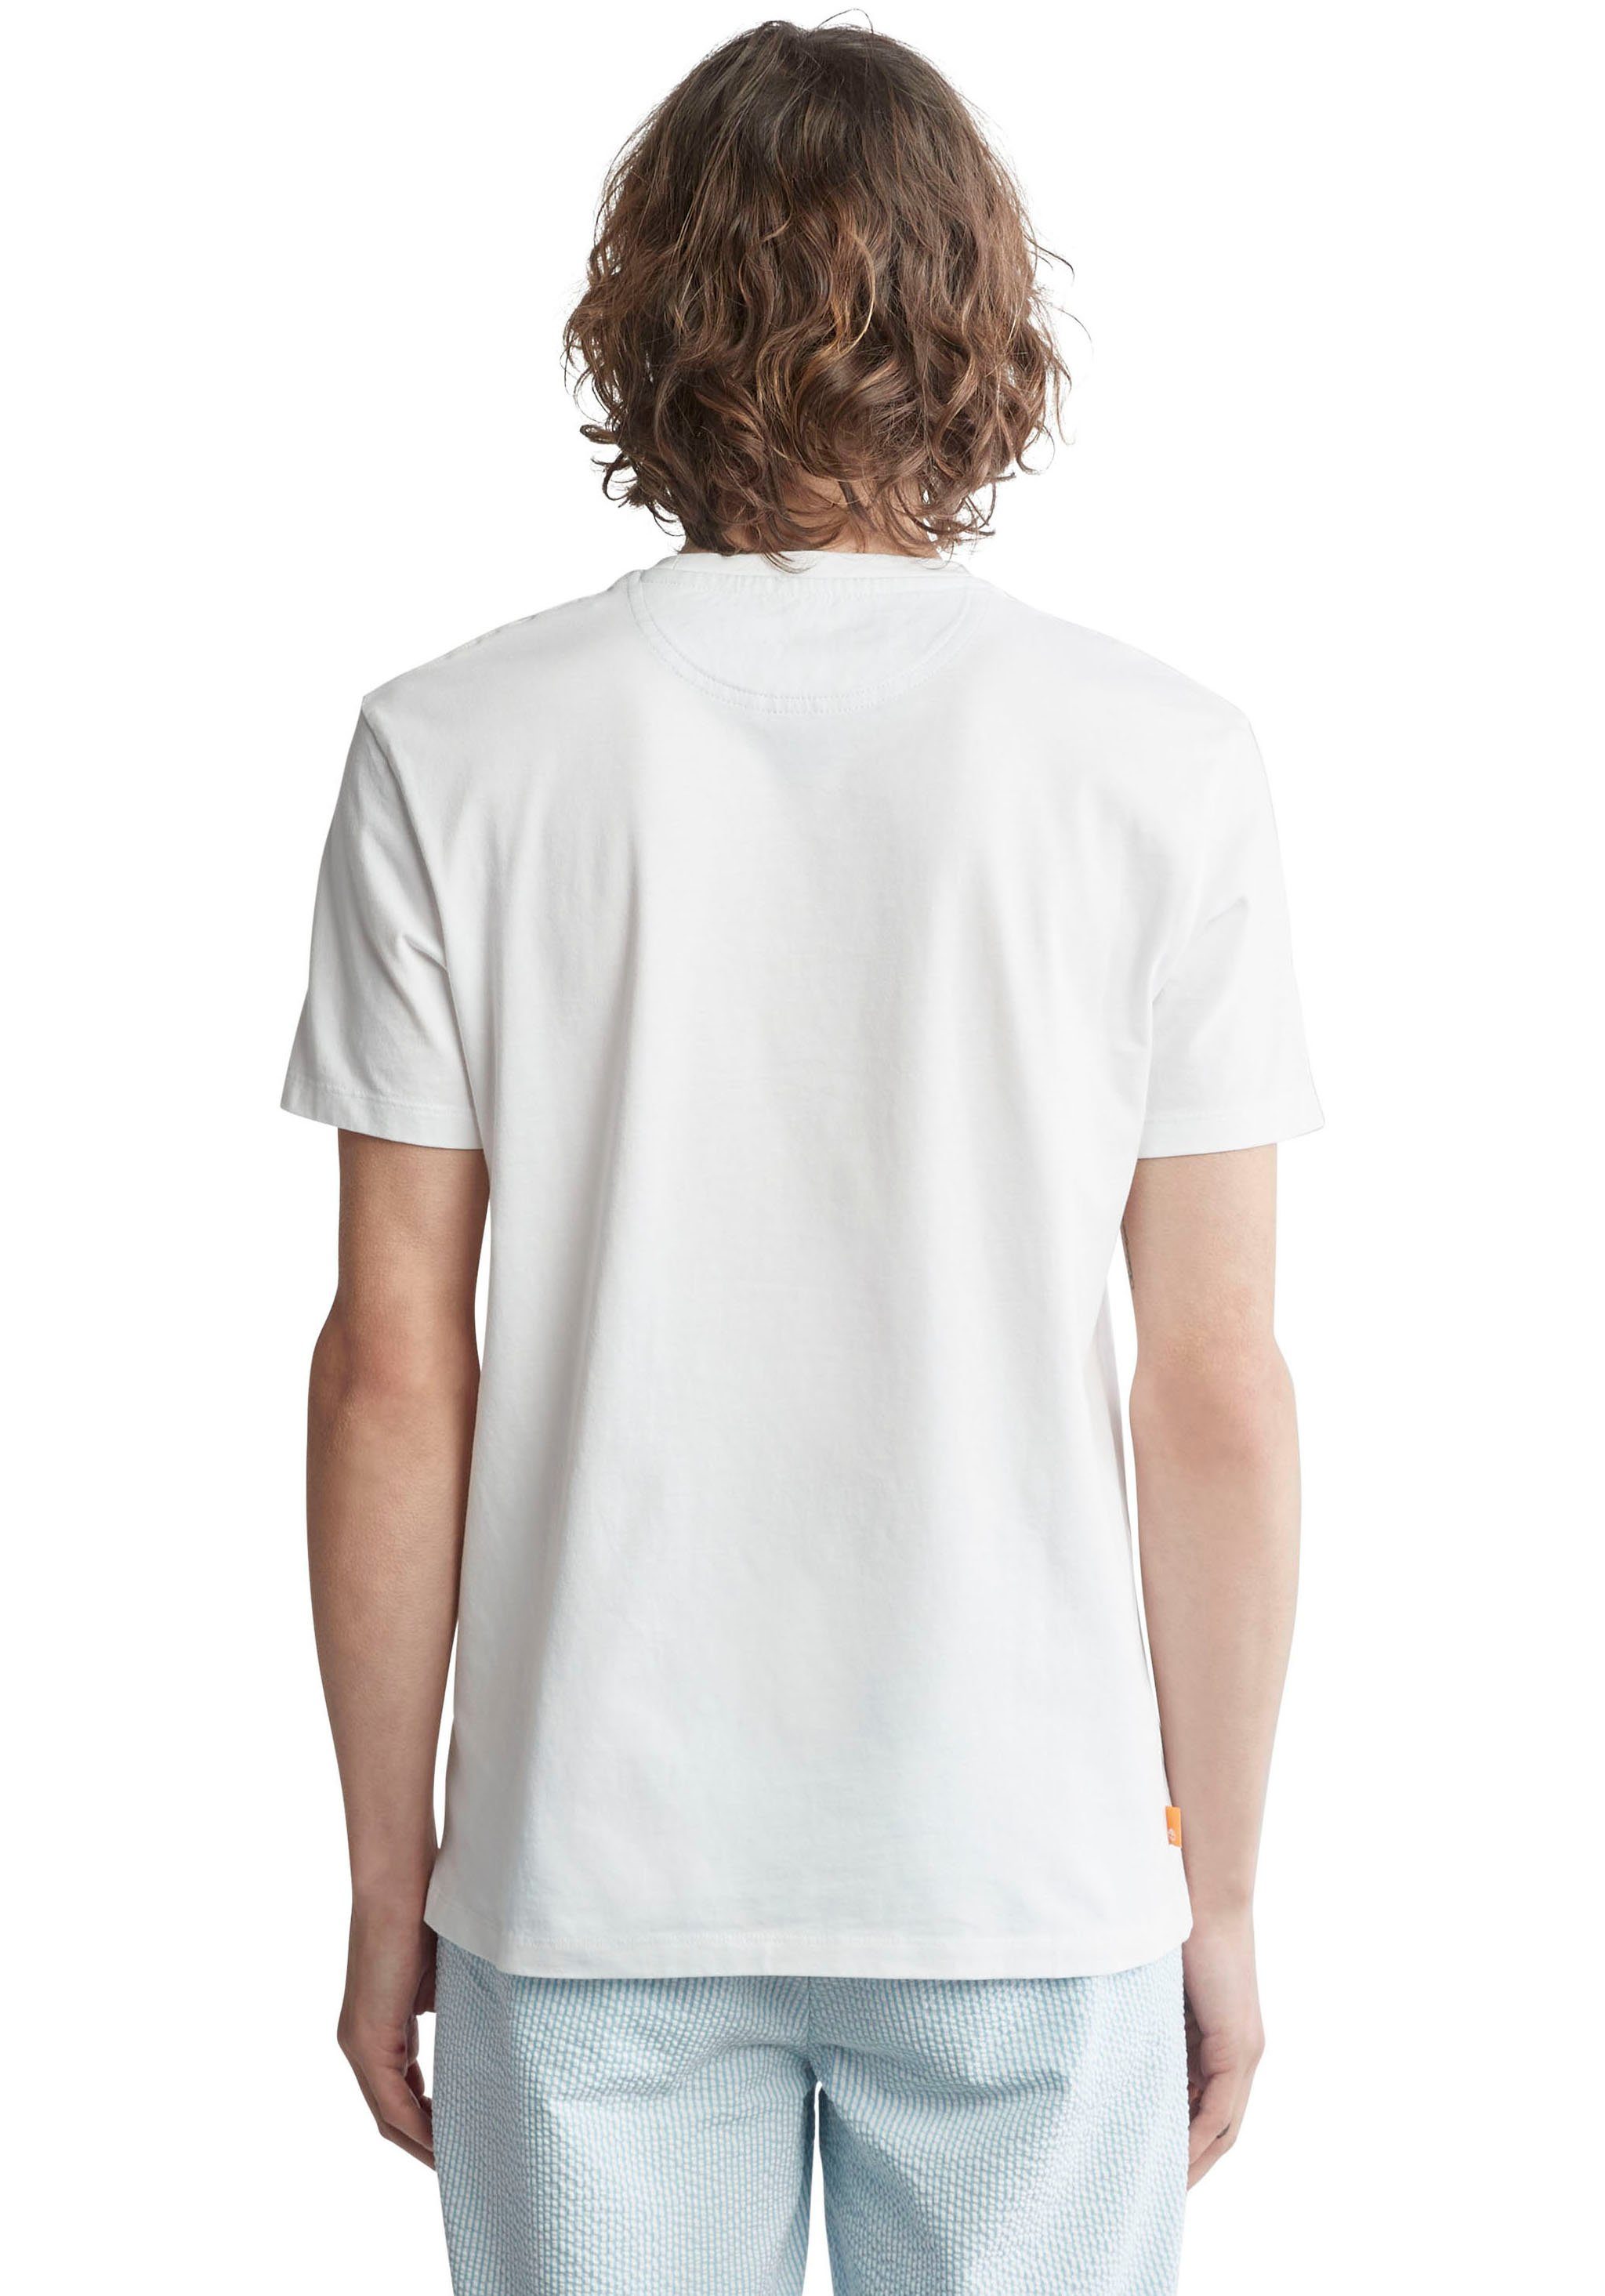 Timberland T-Shirt DUNSTAN RIVER white